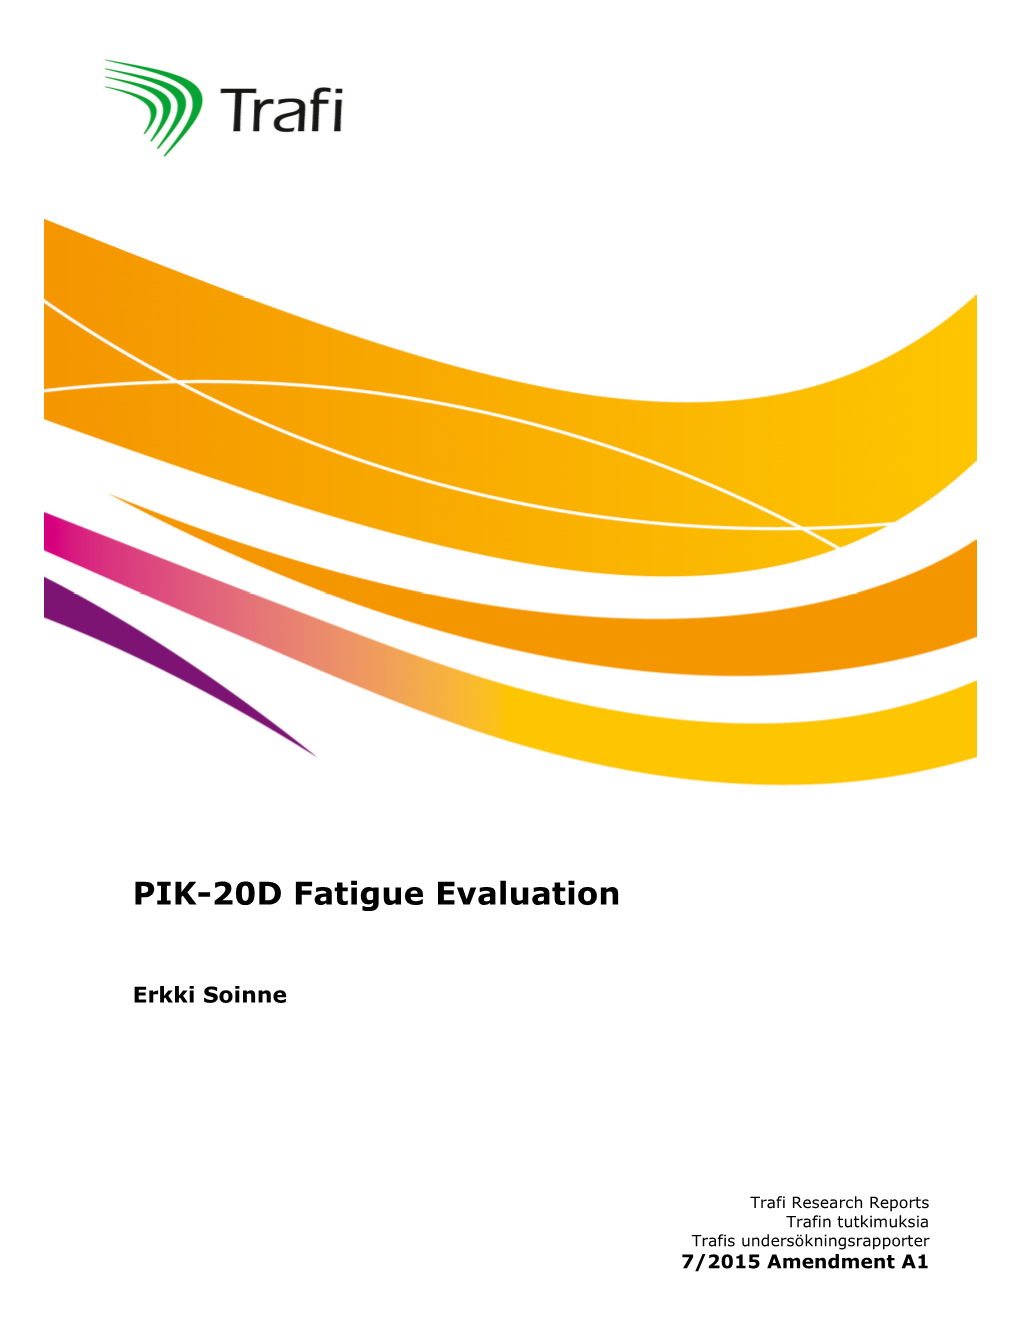 PIK-20D Fatigue Evaluation